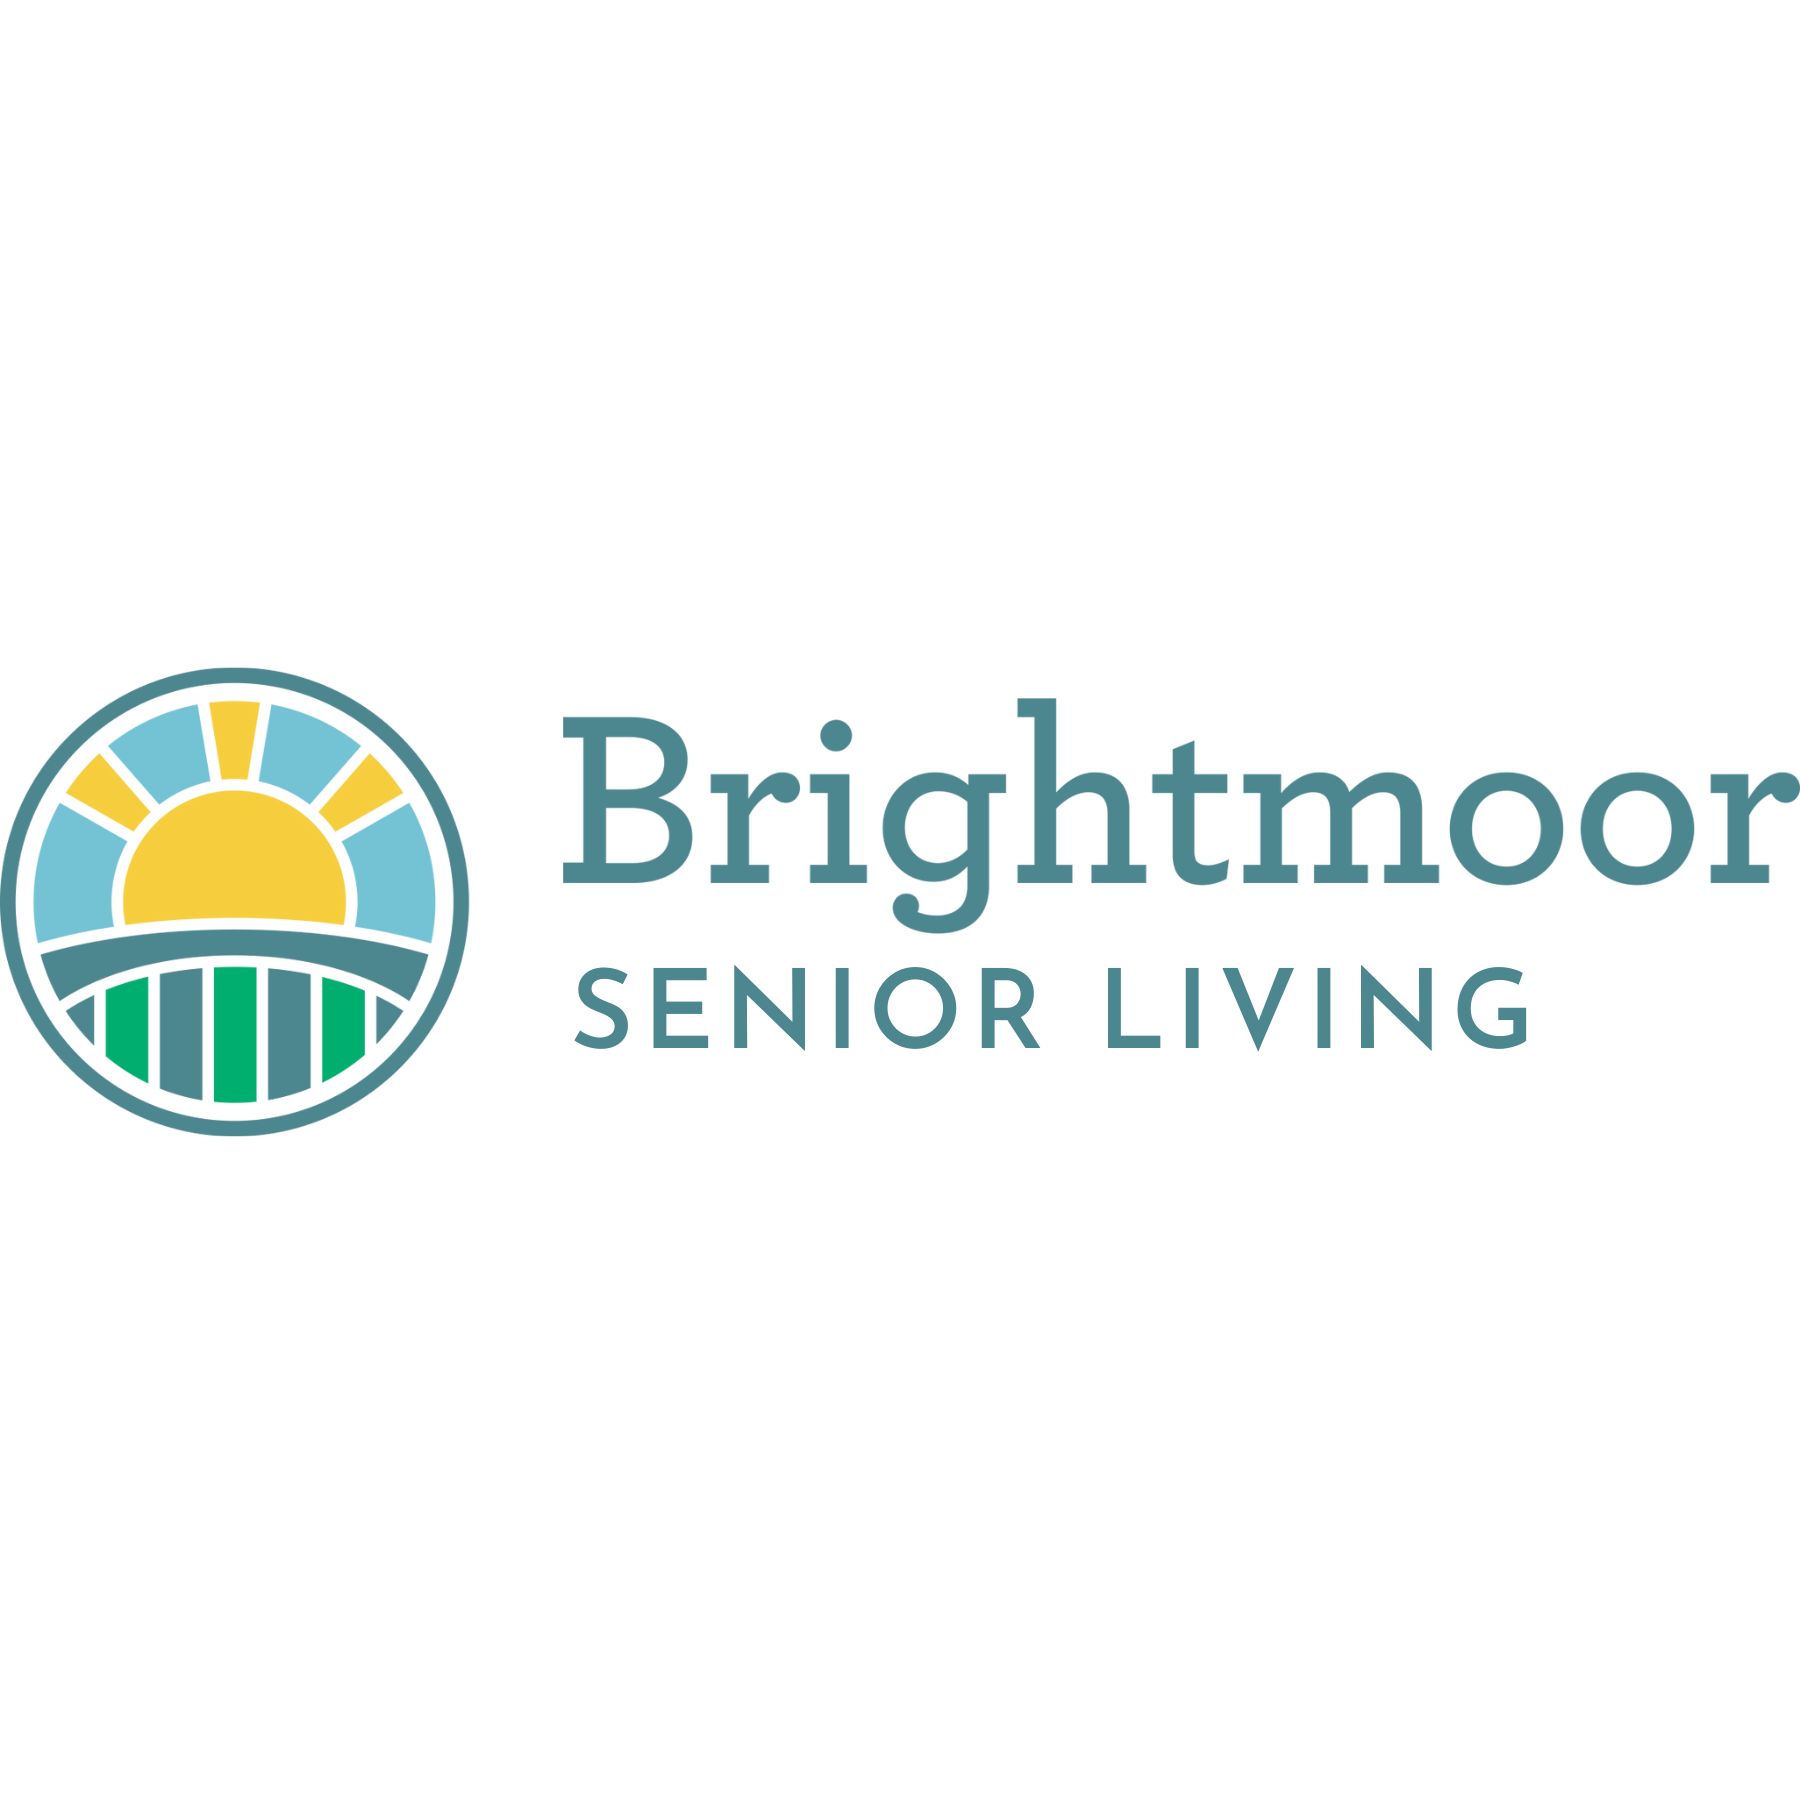 Brightmoor Senior Living - Griffin, GA 30223 - (770)227-9950 | ShowMeLocal.com